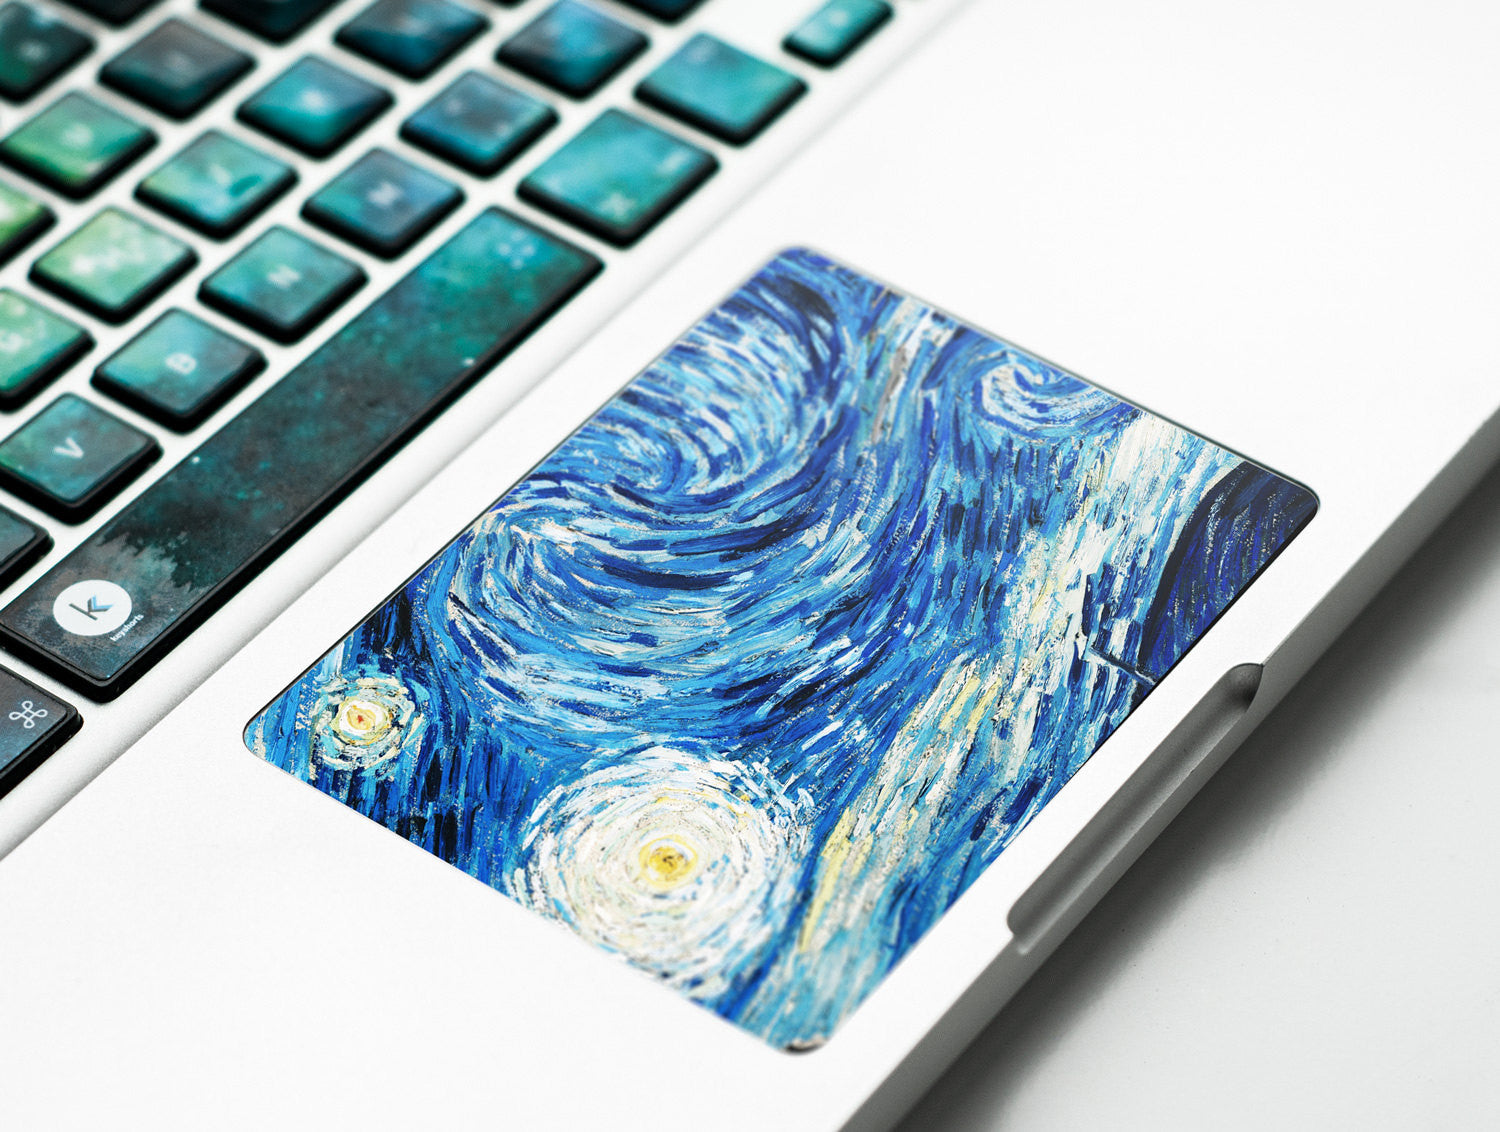 Van Gogh Dreams MacBook Trackpad Sticker at Keyshorts.com - 2